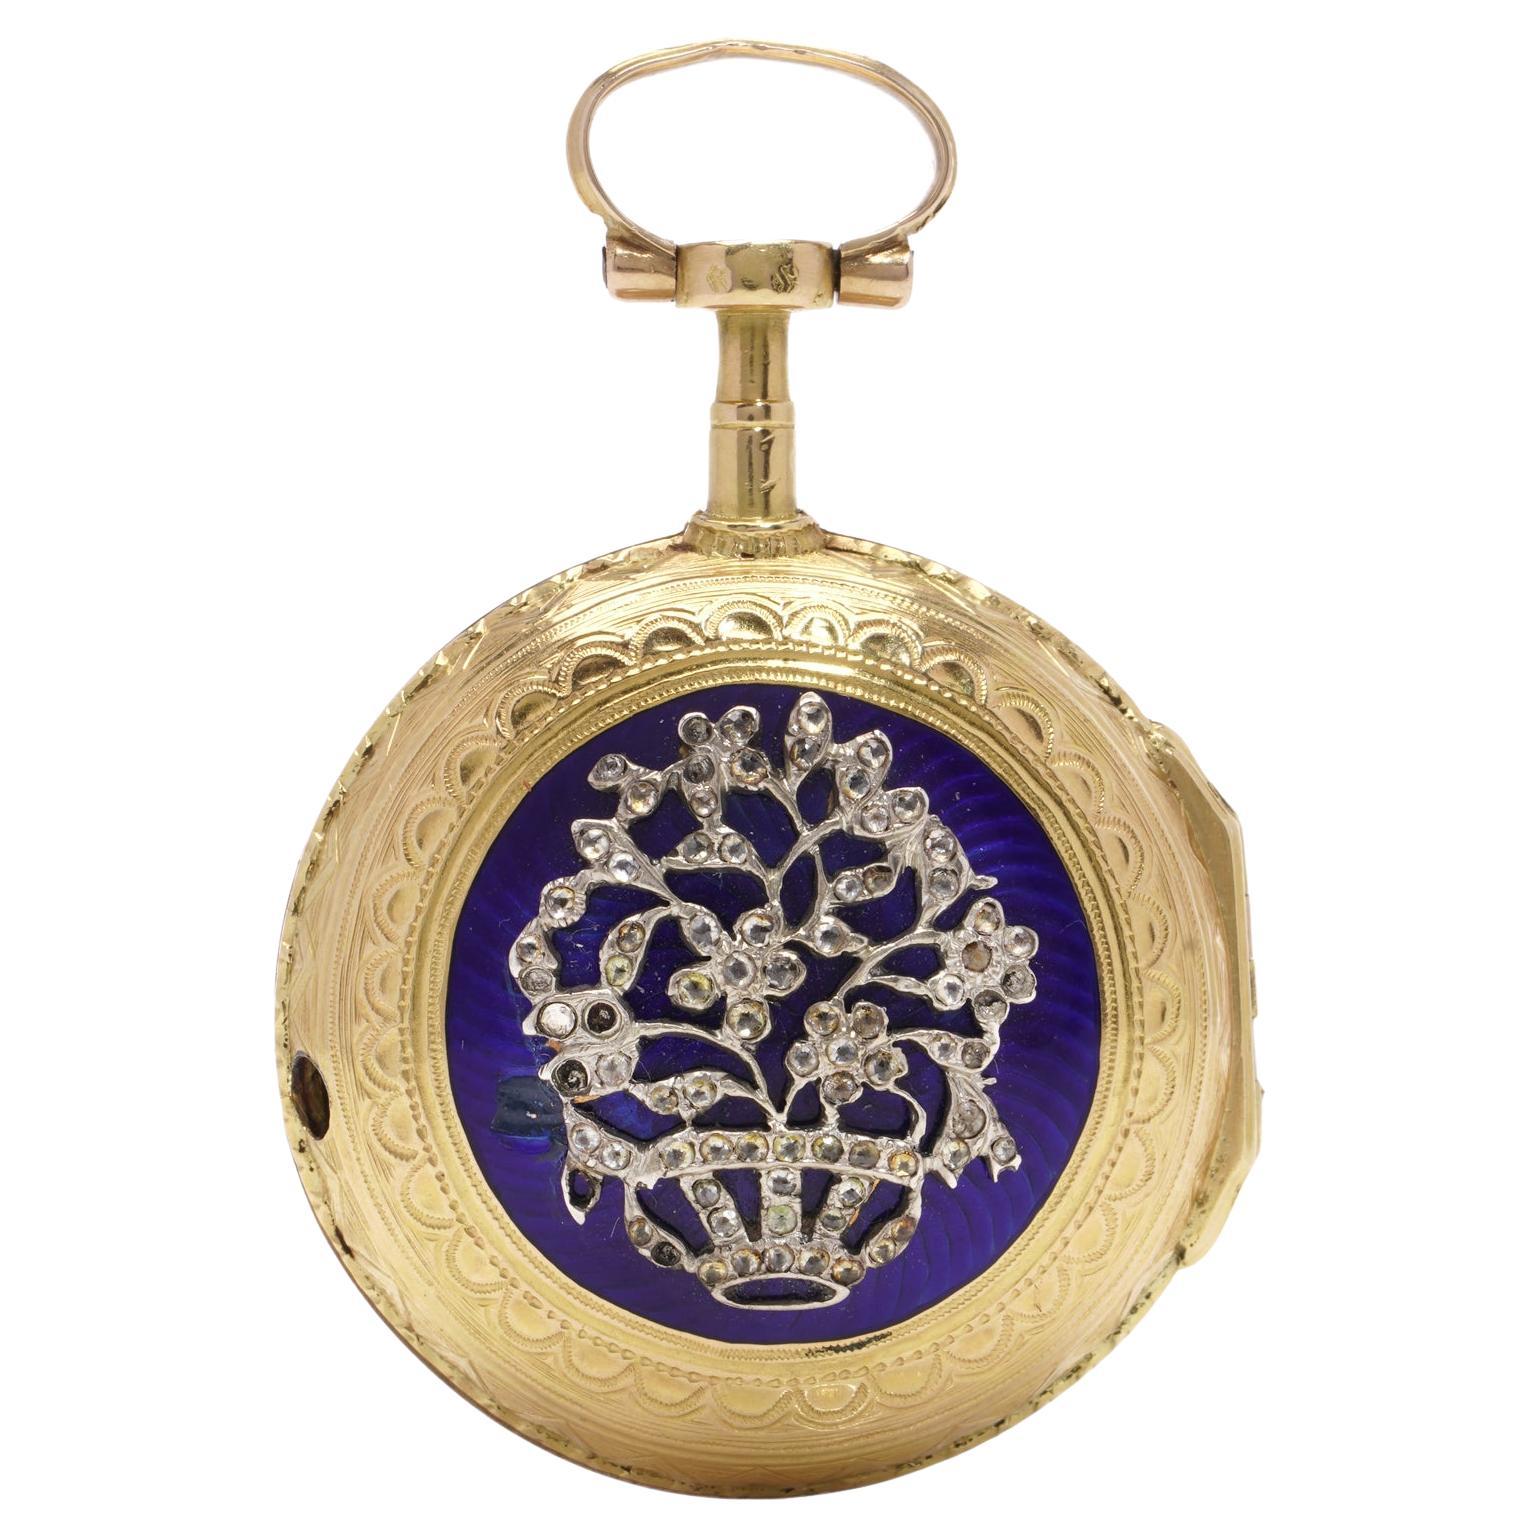 18th-century Lépine Verge movement key wind 18kt gold, a silver pocket watch